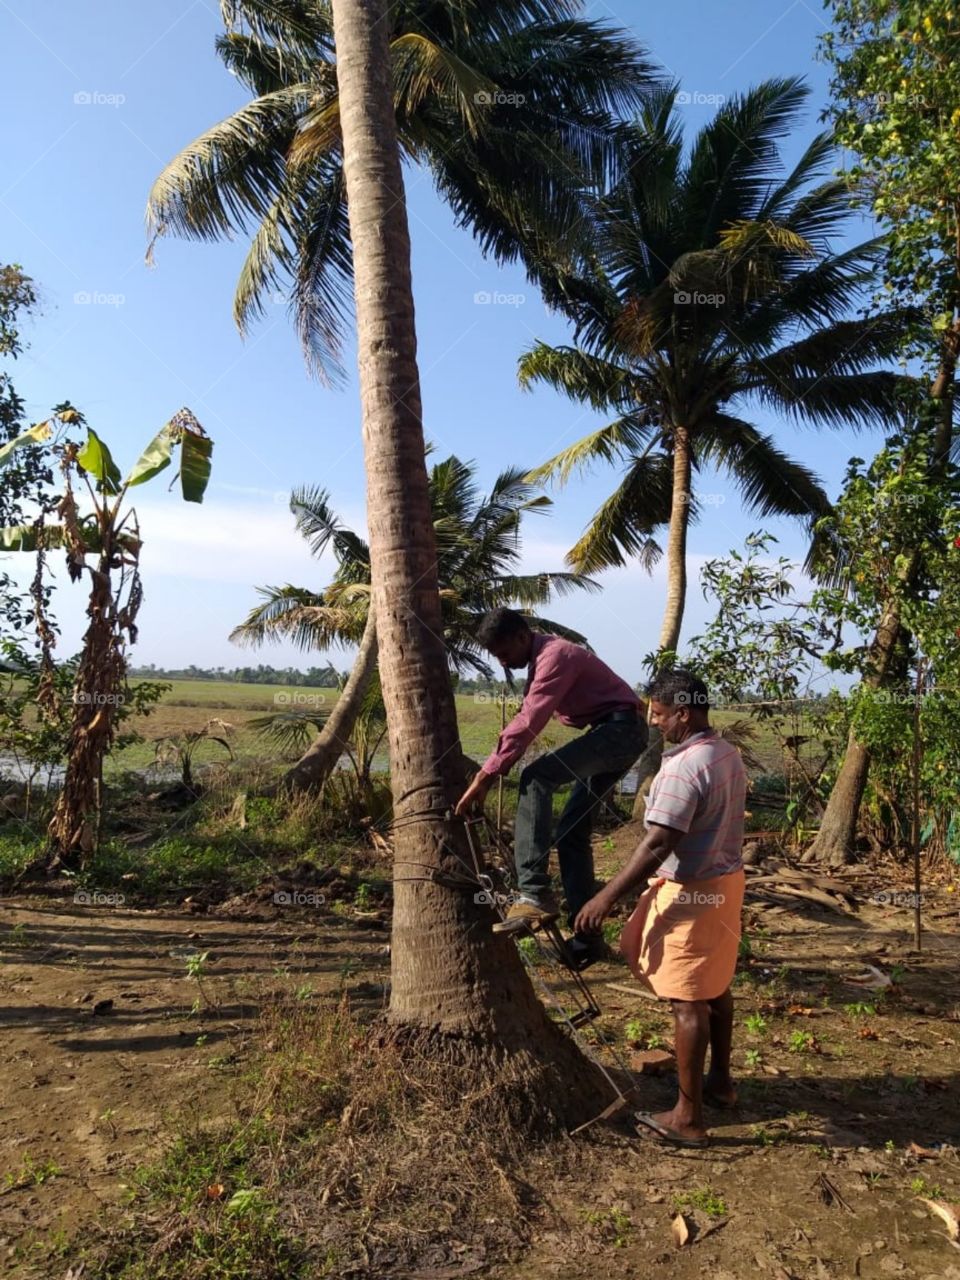 Kumarakom - "coconut climbing"